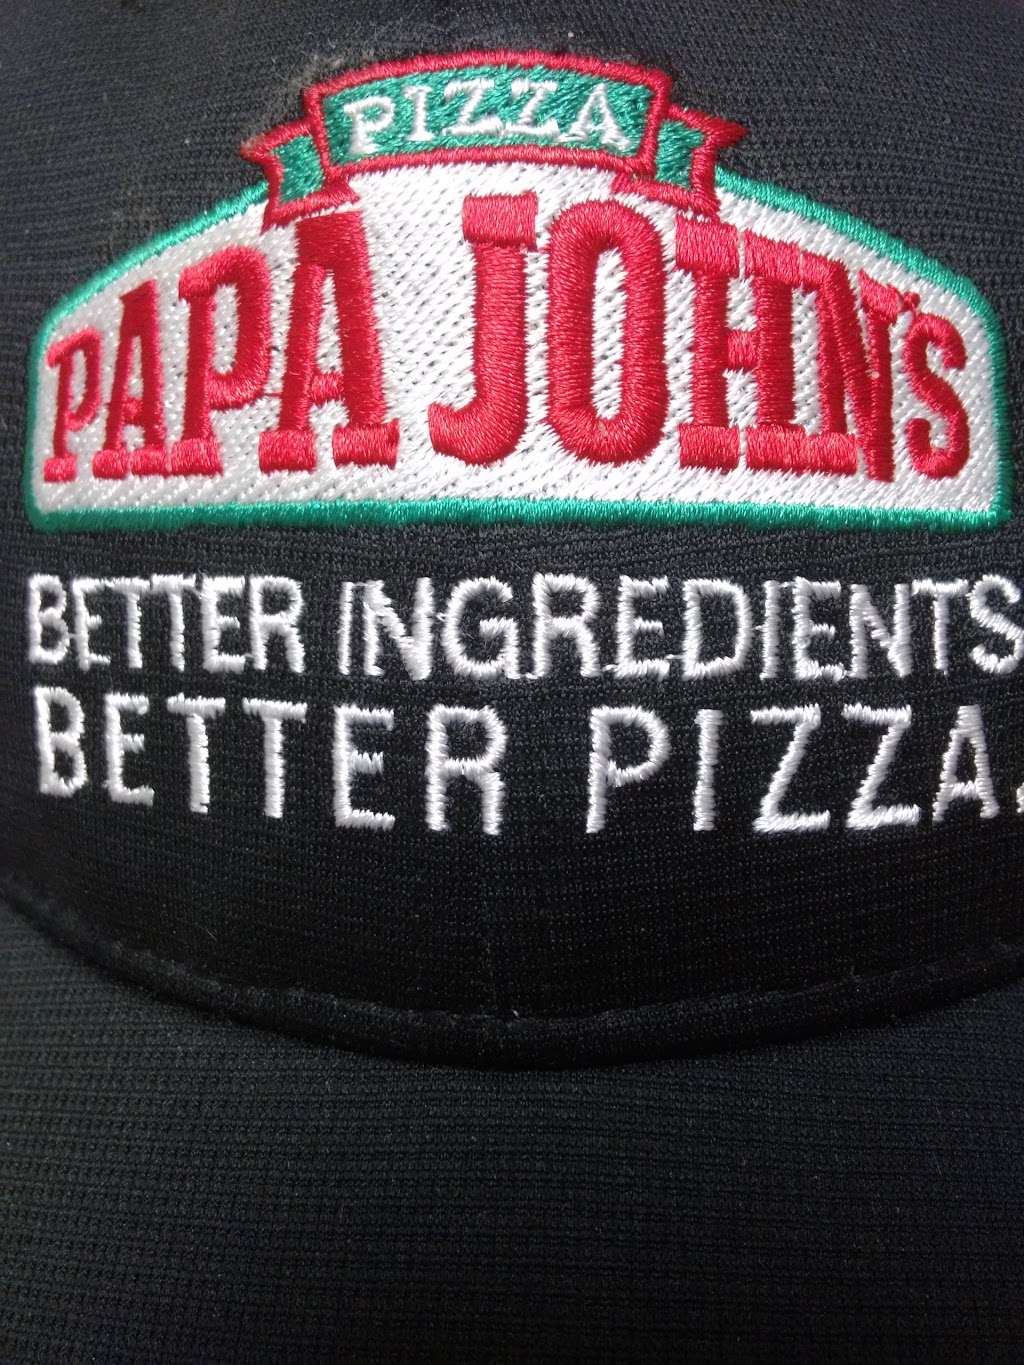 Papa Johns Pizza | 614 Erial Rd, Pine Hill, NJ 08021 | Phone: (856) 782-7888